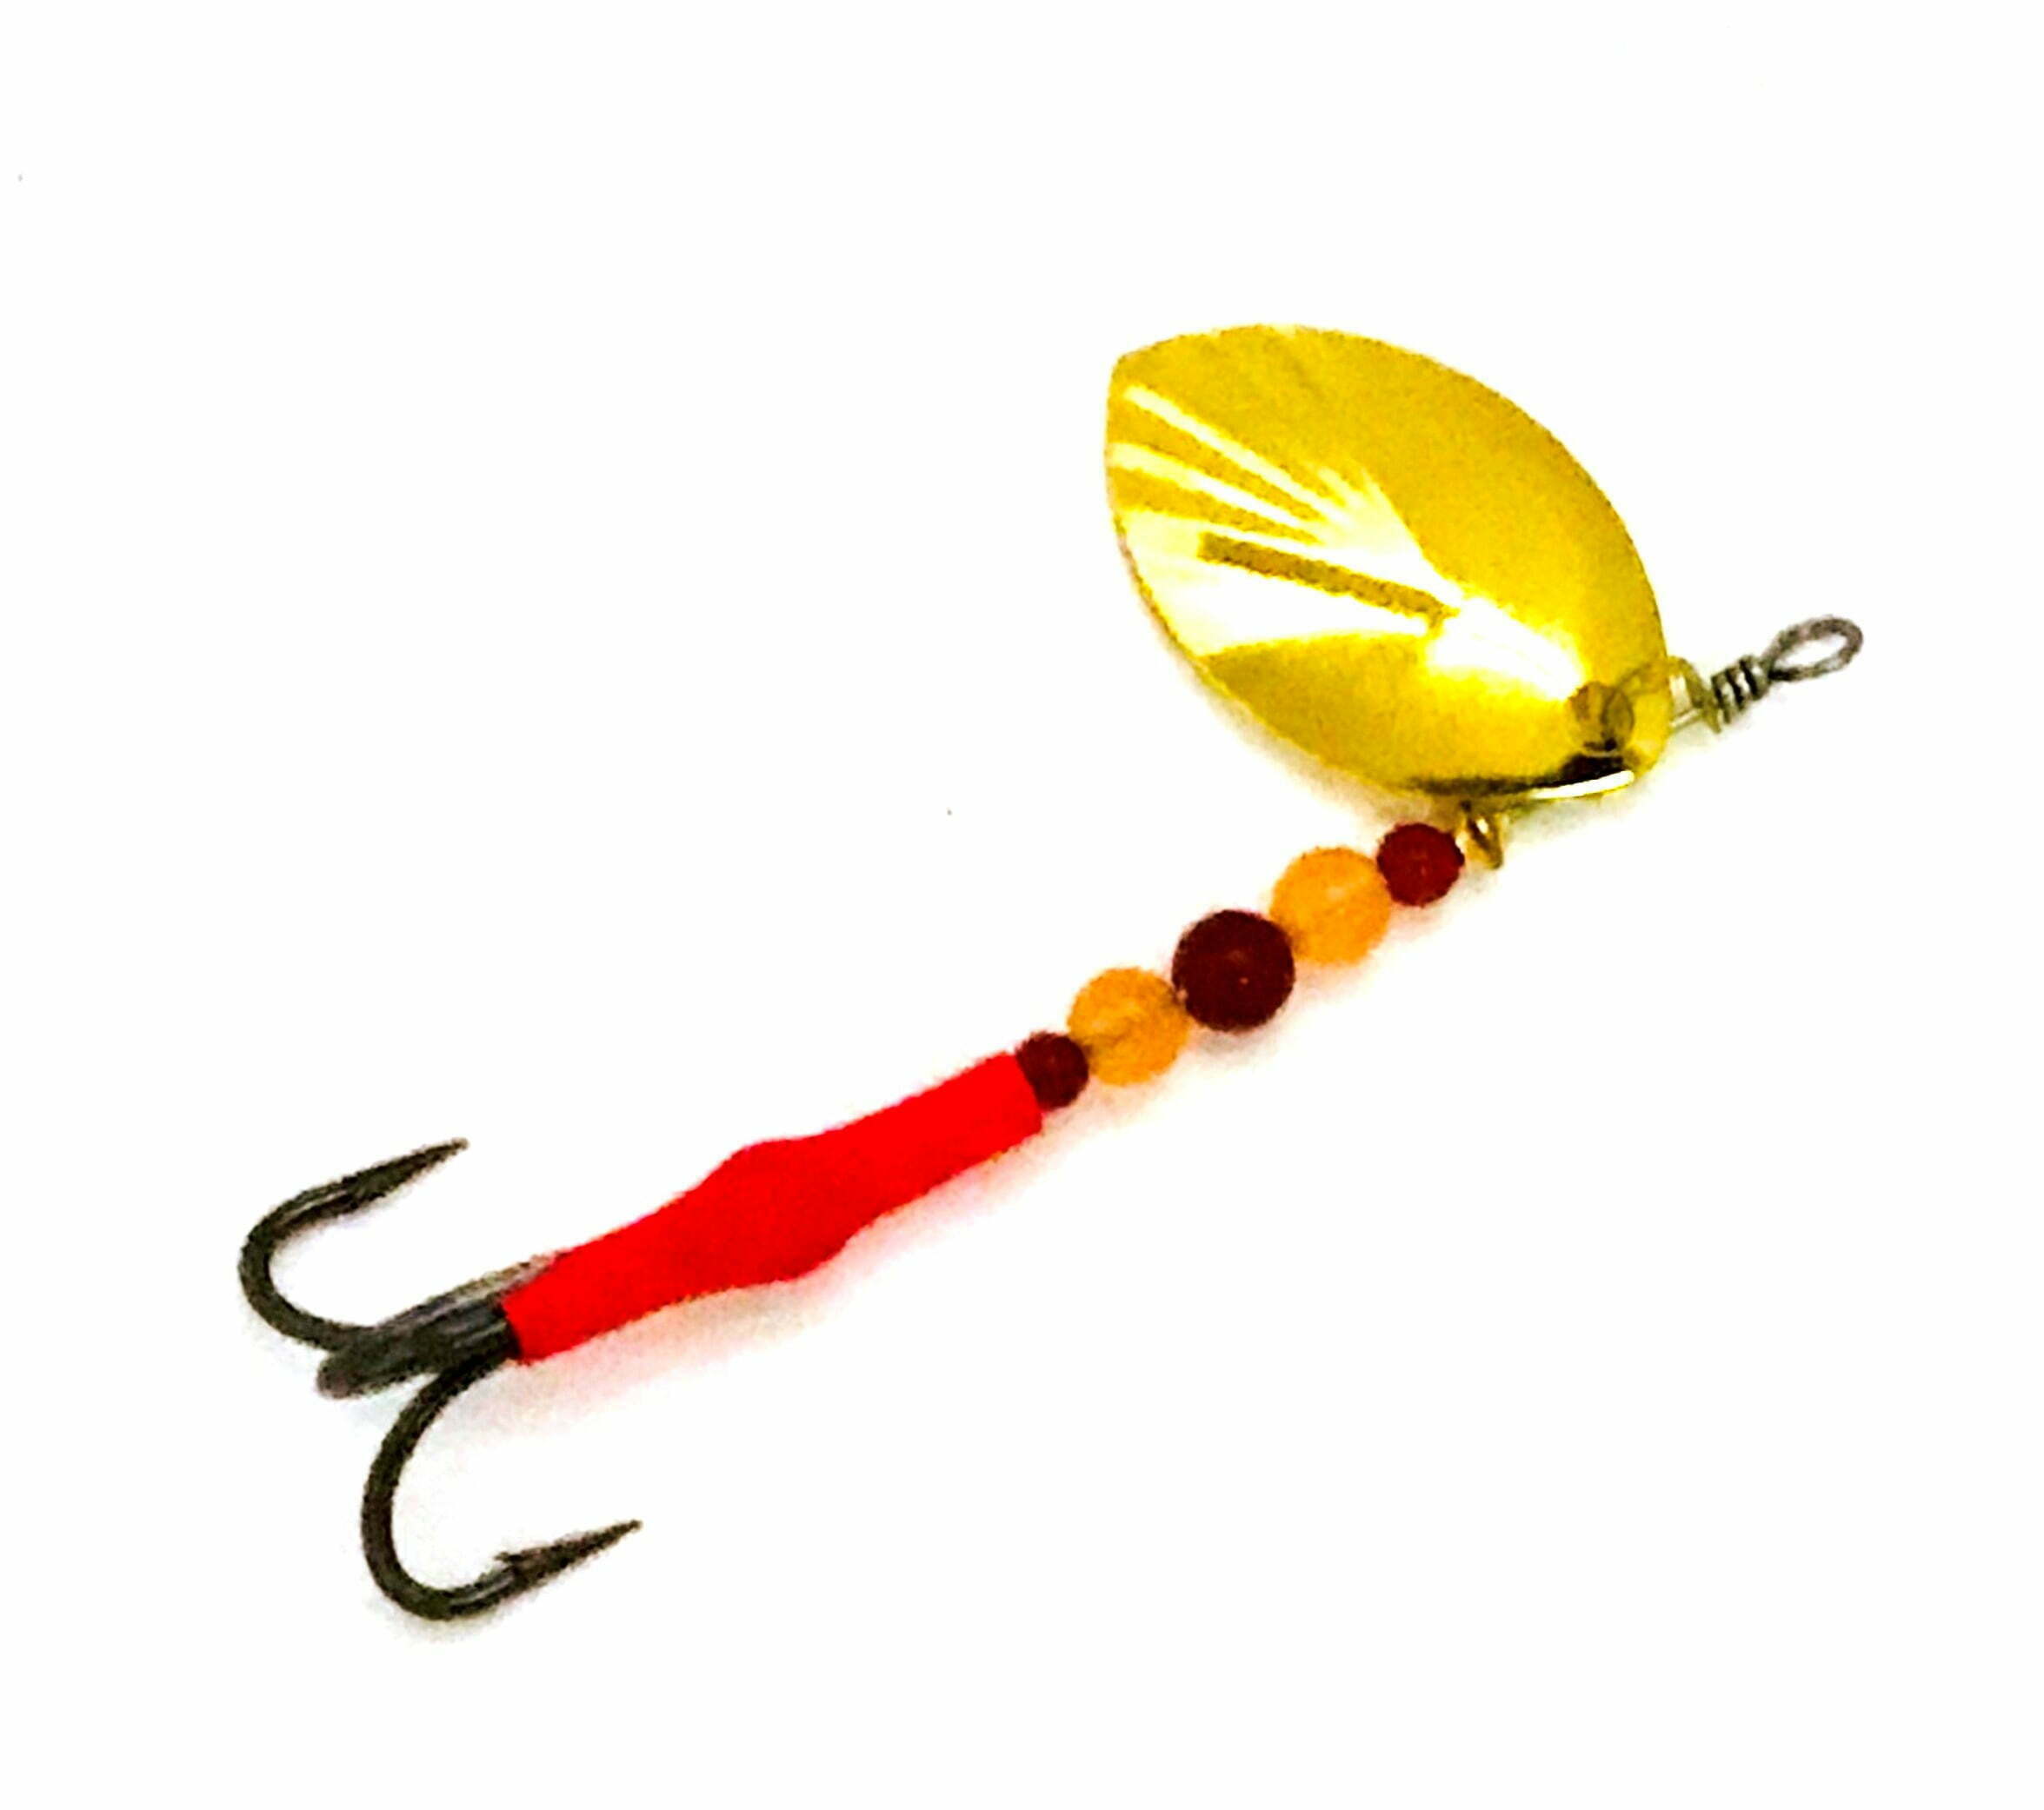 https://stonecoldbeads.com/wp-content/uploads/2019/04/Dirty-Troll-4-Cascade-Red-Crawfish-Trolling-Spinner-with-Treble-Hook.jpeg